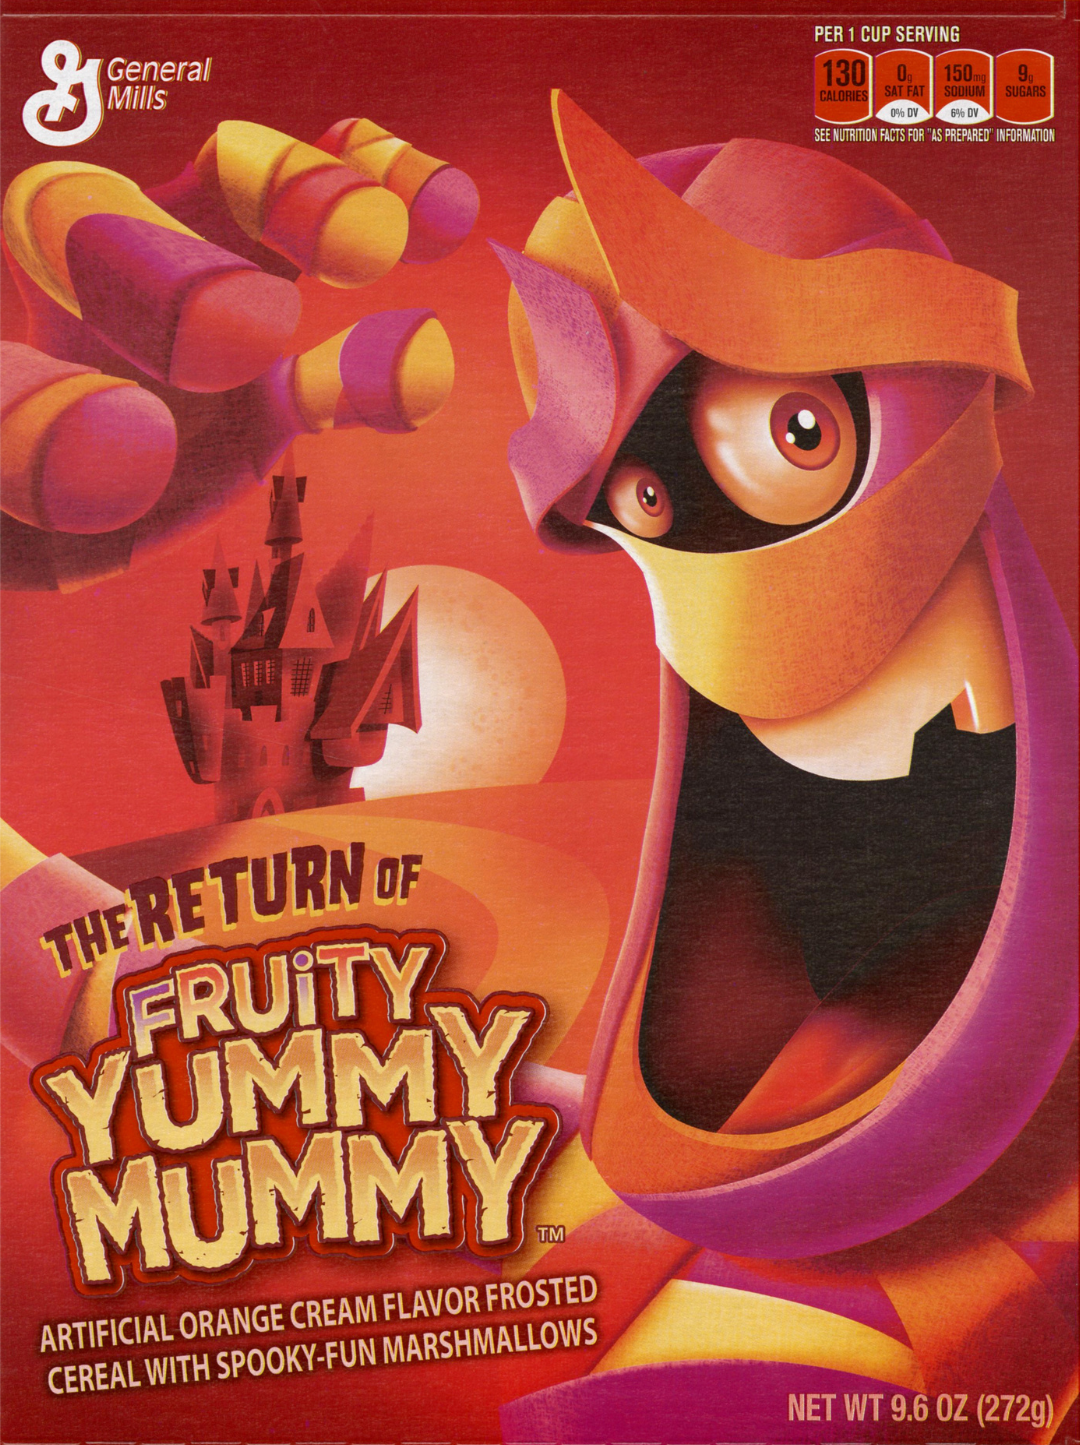 Yummy Mummy 2013 cereal box